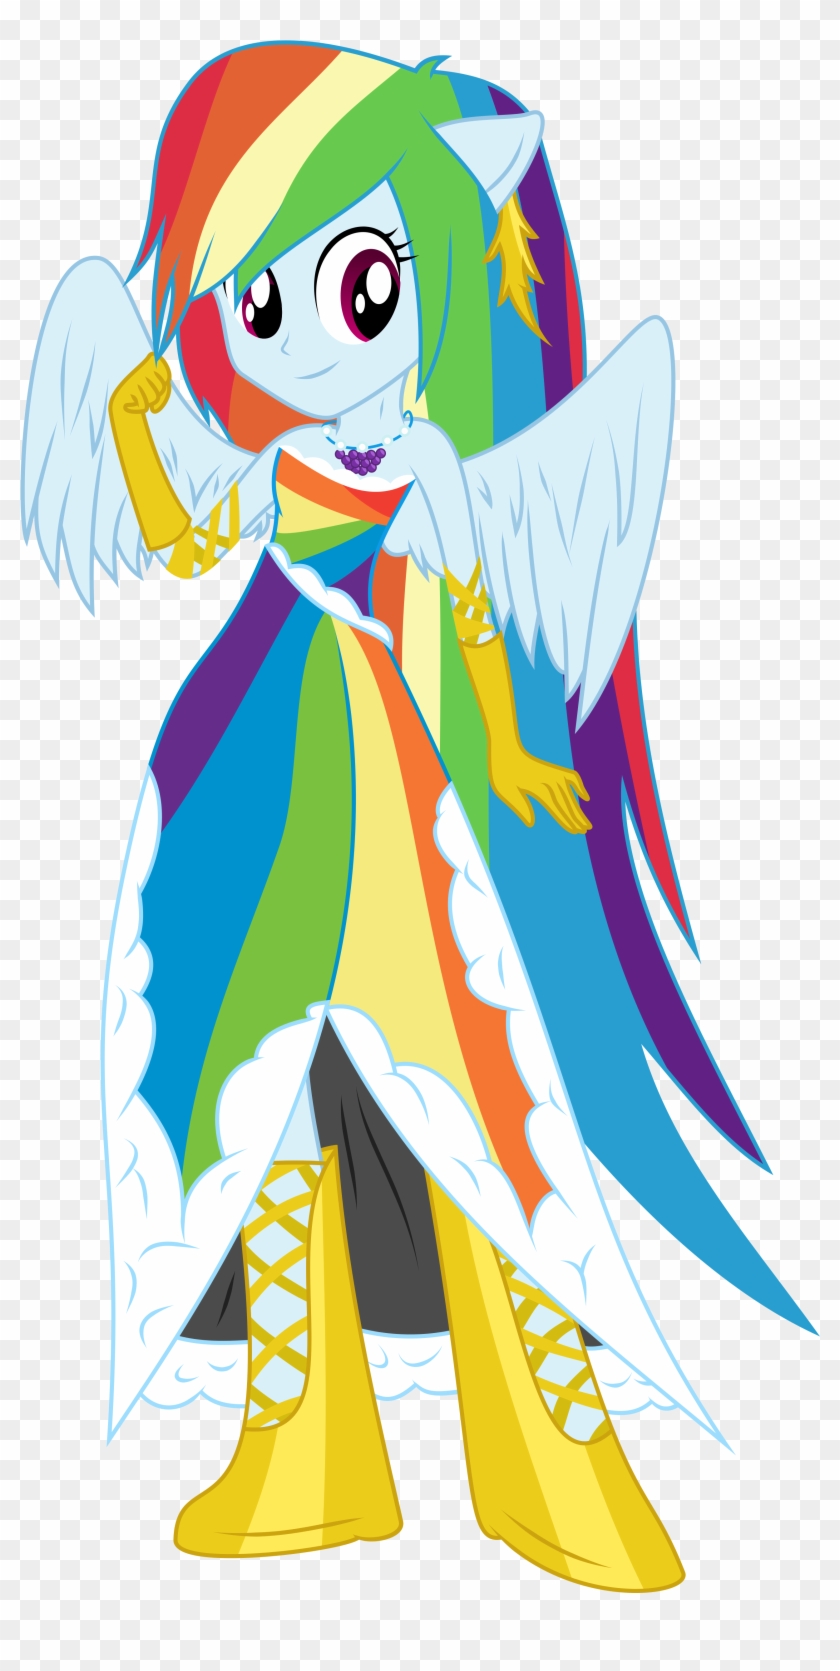 E E R 68 6 Rainbow Dash In Gala Dress By Ruinedomega - Equestria Girls Rainbow Dash Dress #321867